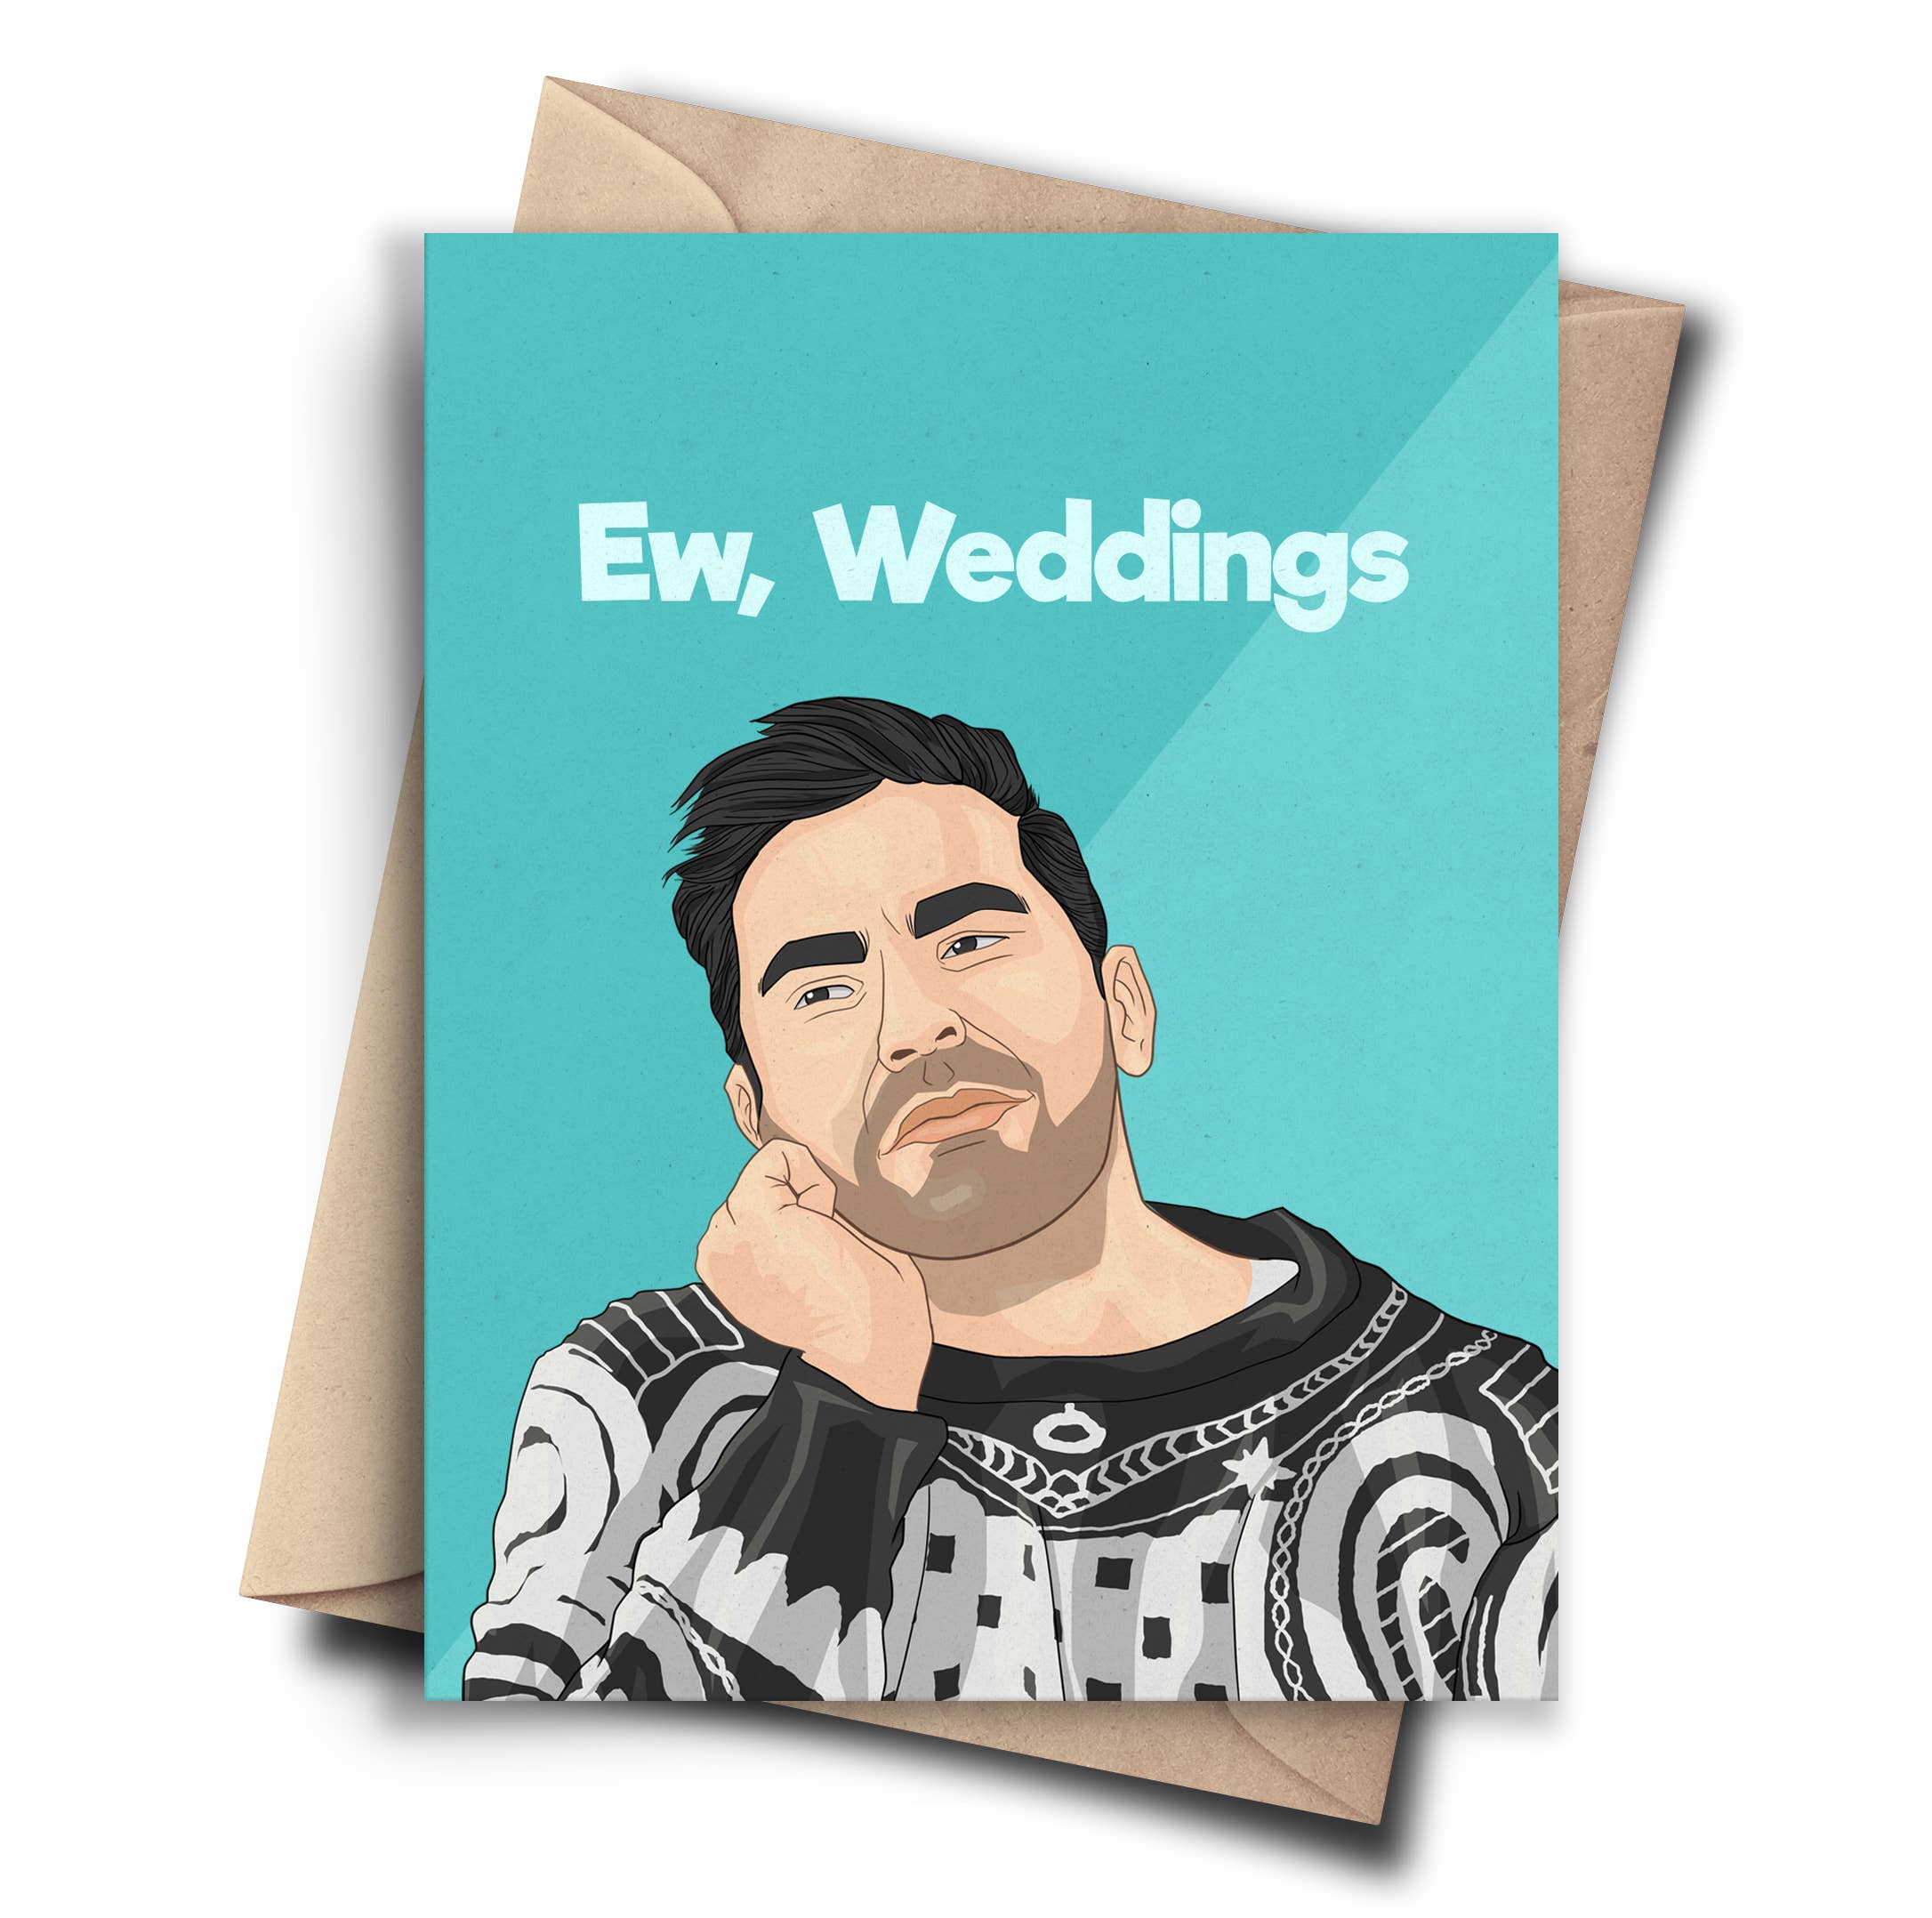 Funny Wedding Card - Schitt's Funny Engagement Card